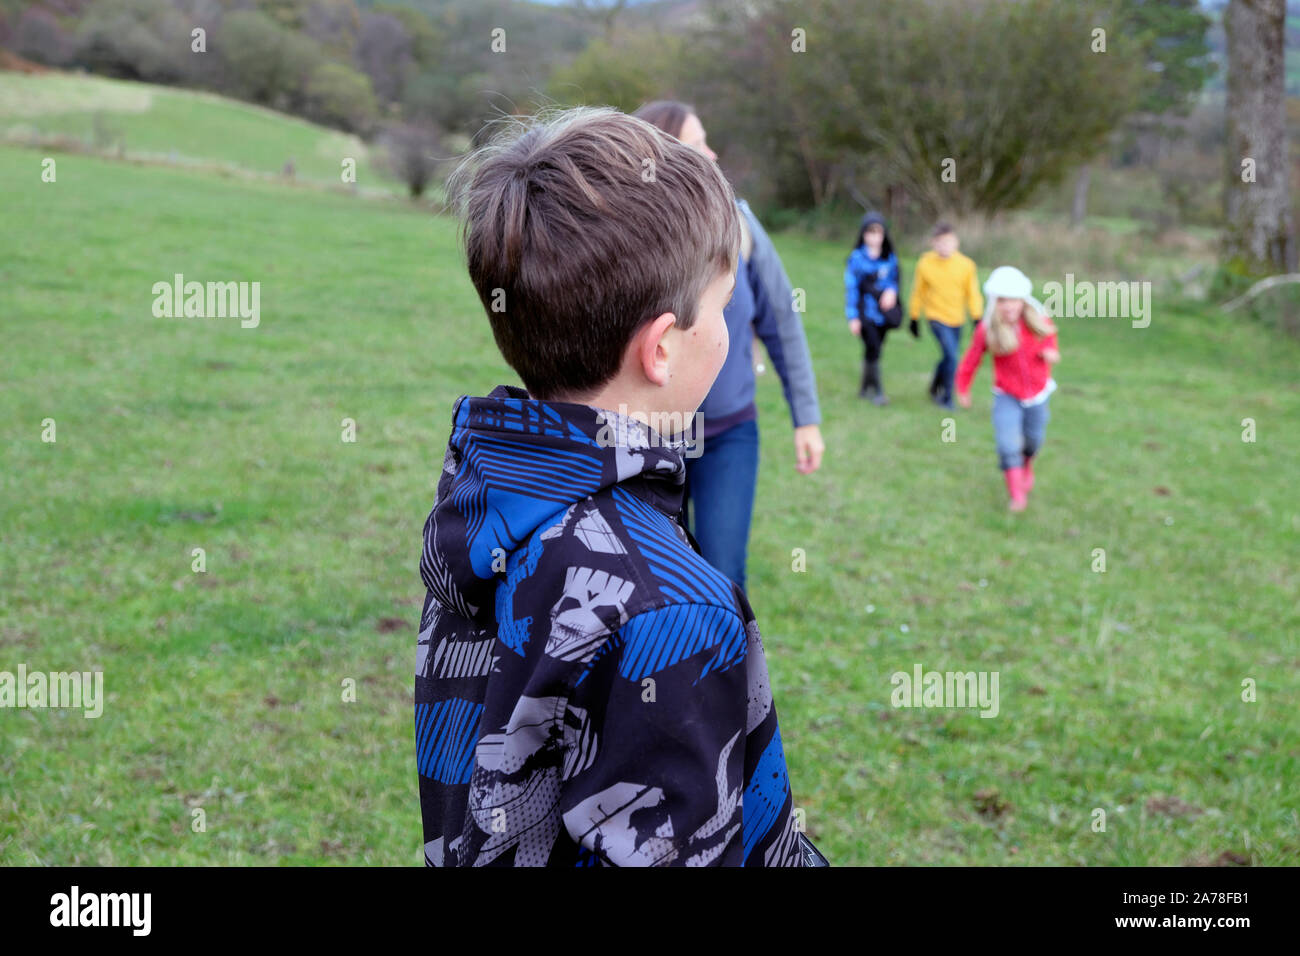 Familie Kinder Wandern in der Natur in den Zeugnisferien Pause im Herbst in Carmarthenshire Wales UK KATHY DEWITT Stockfoto